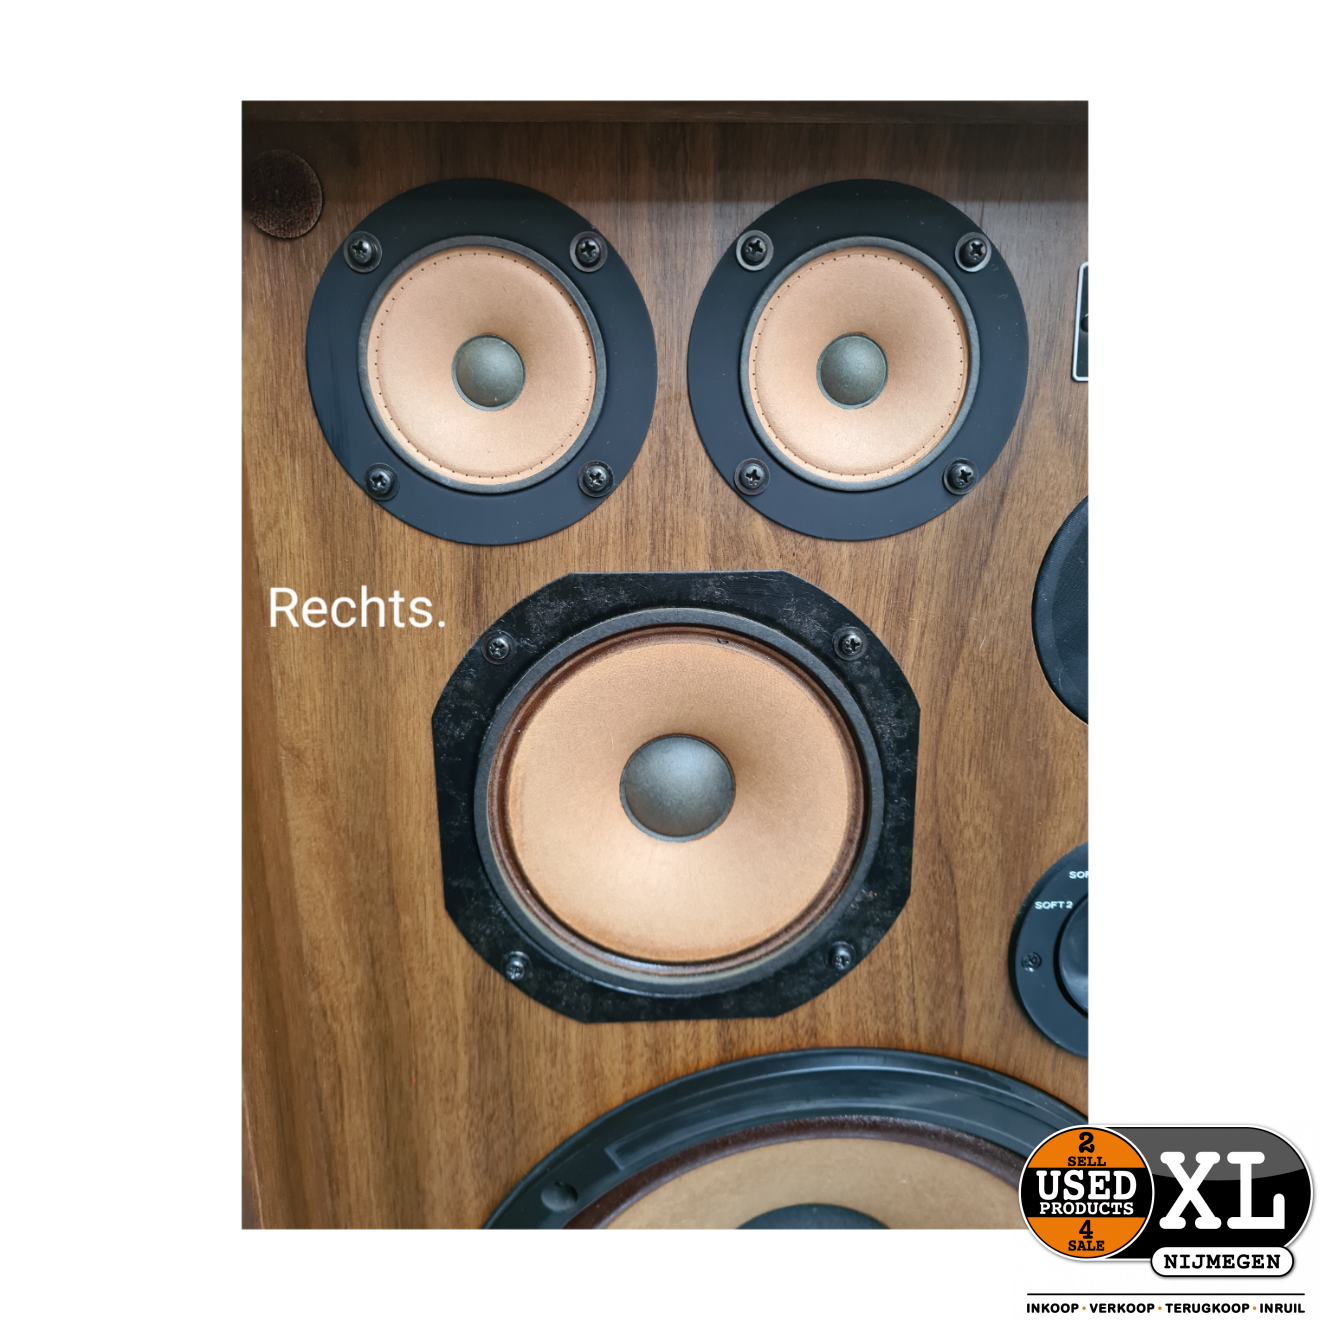 vintage speakers KL | Nette - Used Products XL